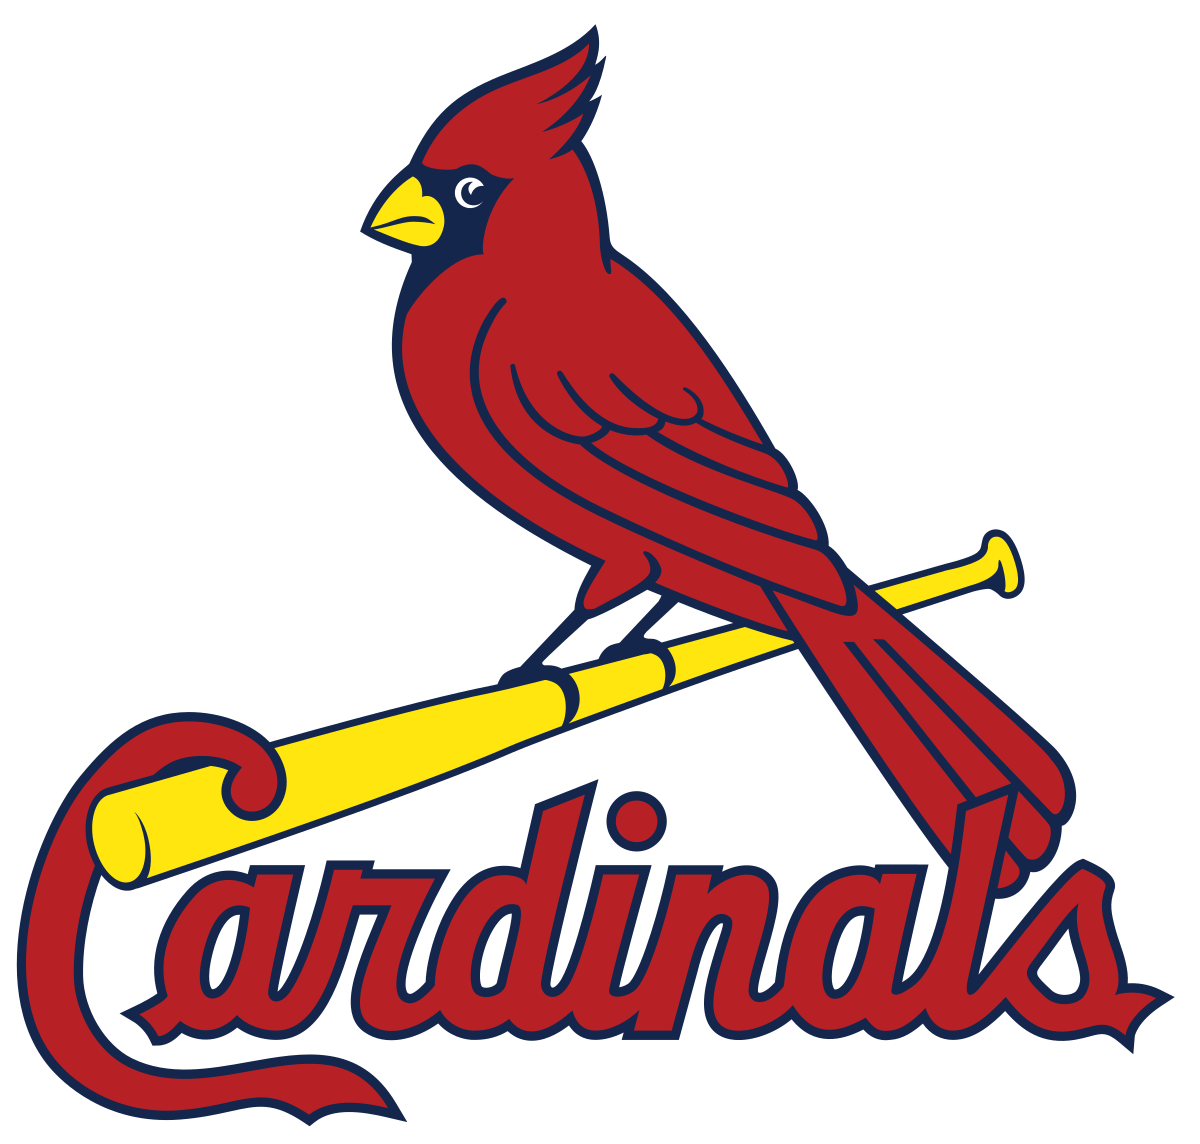 Thegenuineleather St. Louis Cardinals Bomber Jacket 